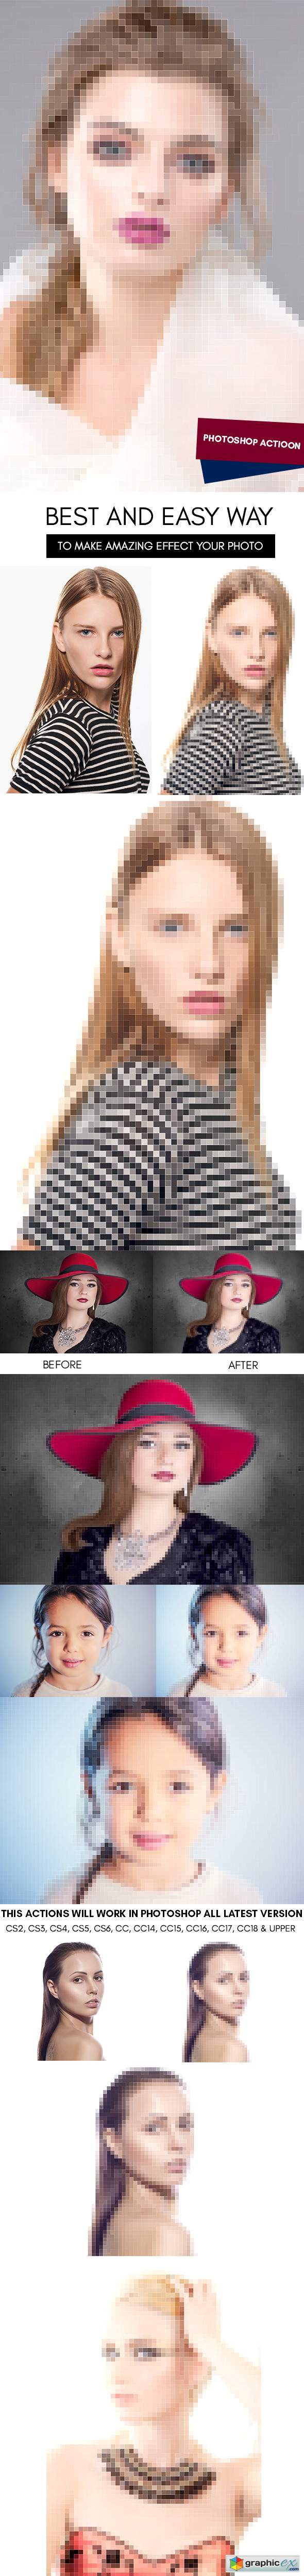 Pixel Art Photoshop Action